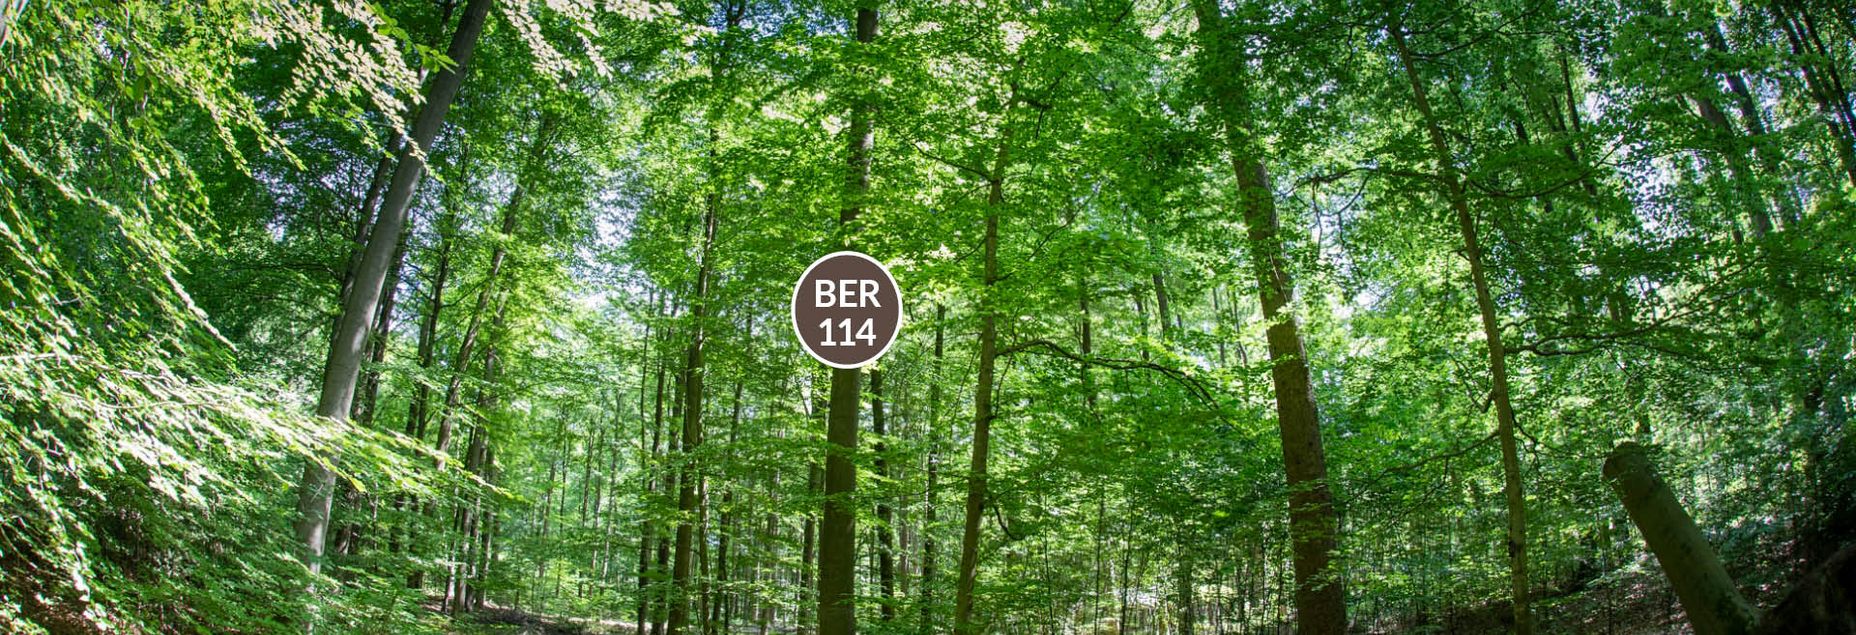 Baum BER 114 - Fisheyeperspektive